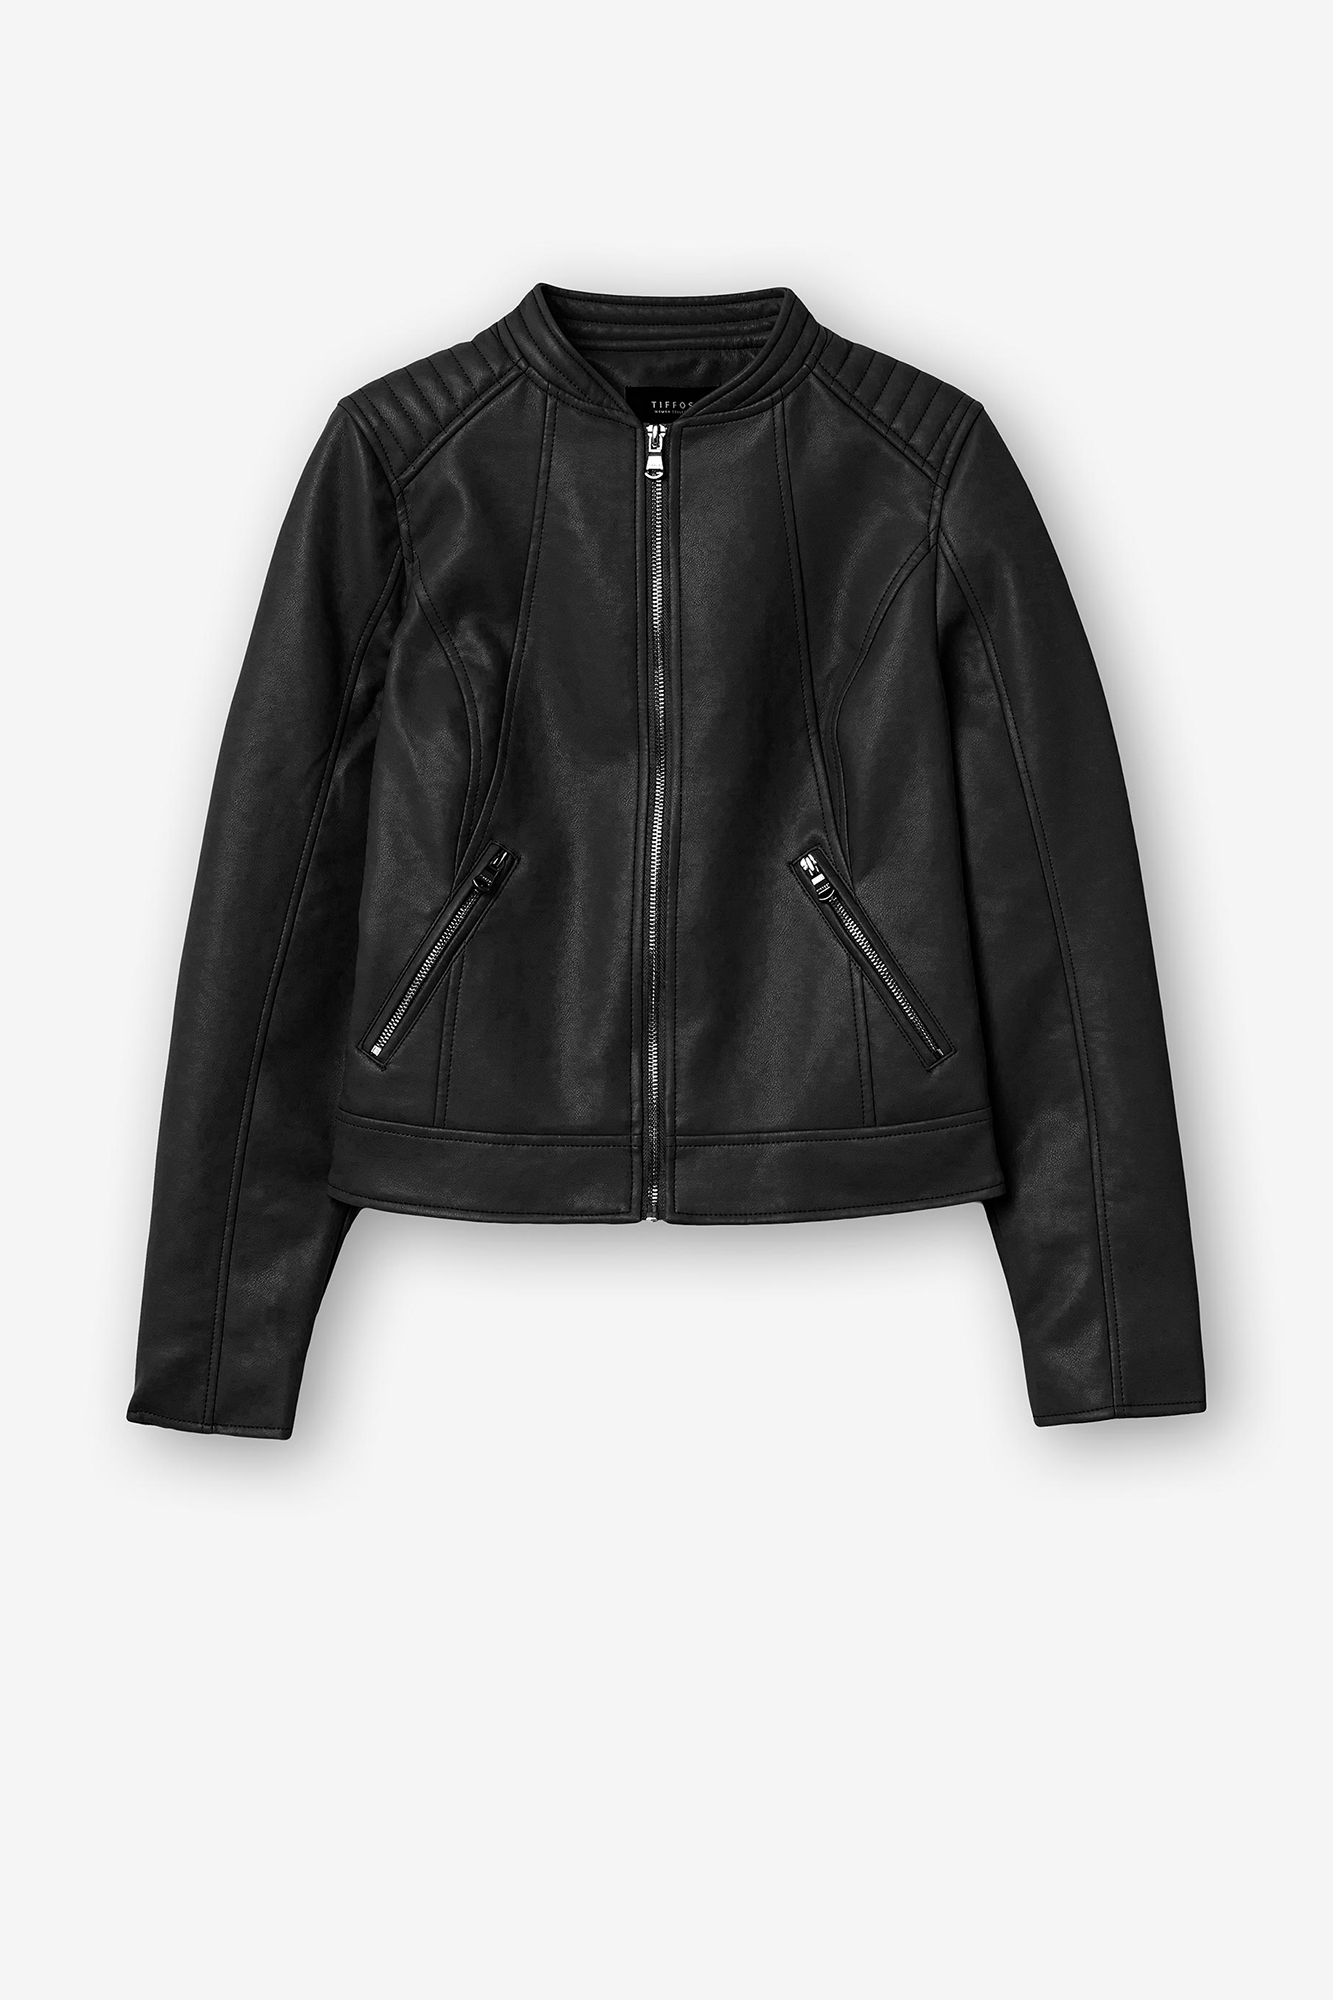 Fabletics Bray Black Moto Full Zip Jacket Lined Vegan Leather Women's Small